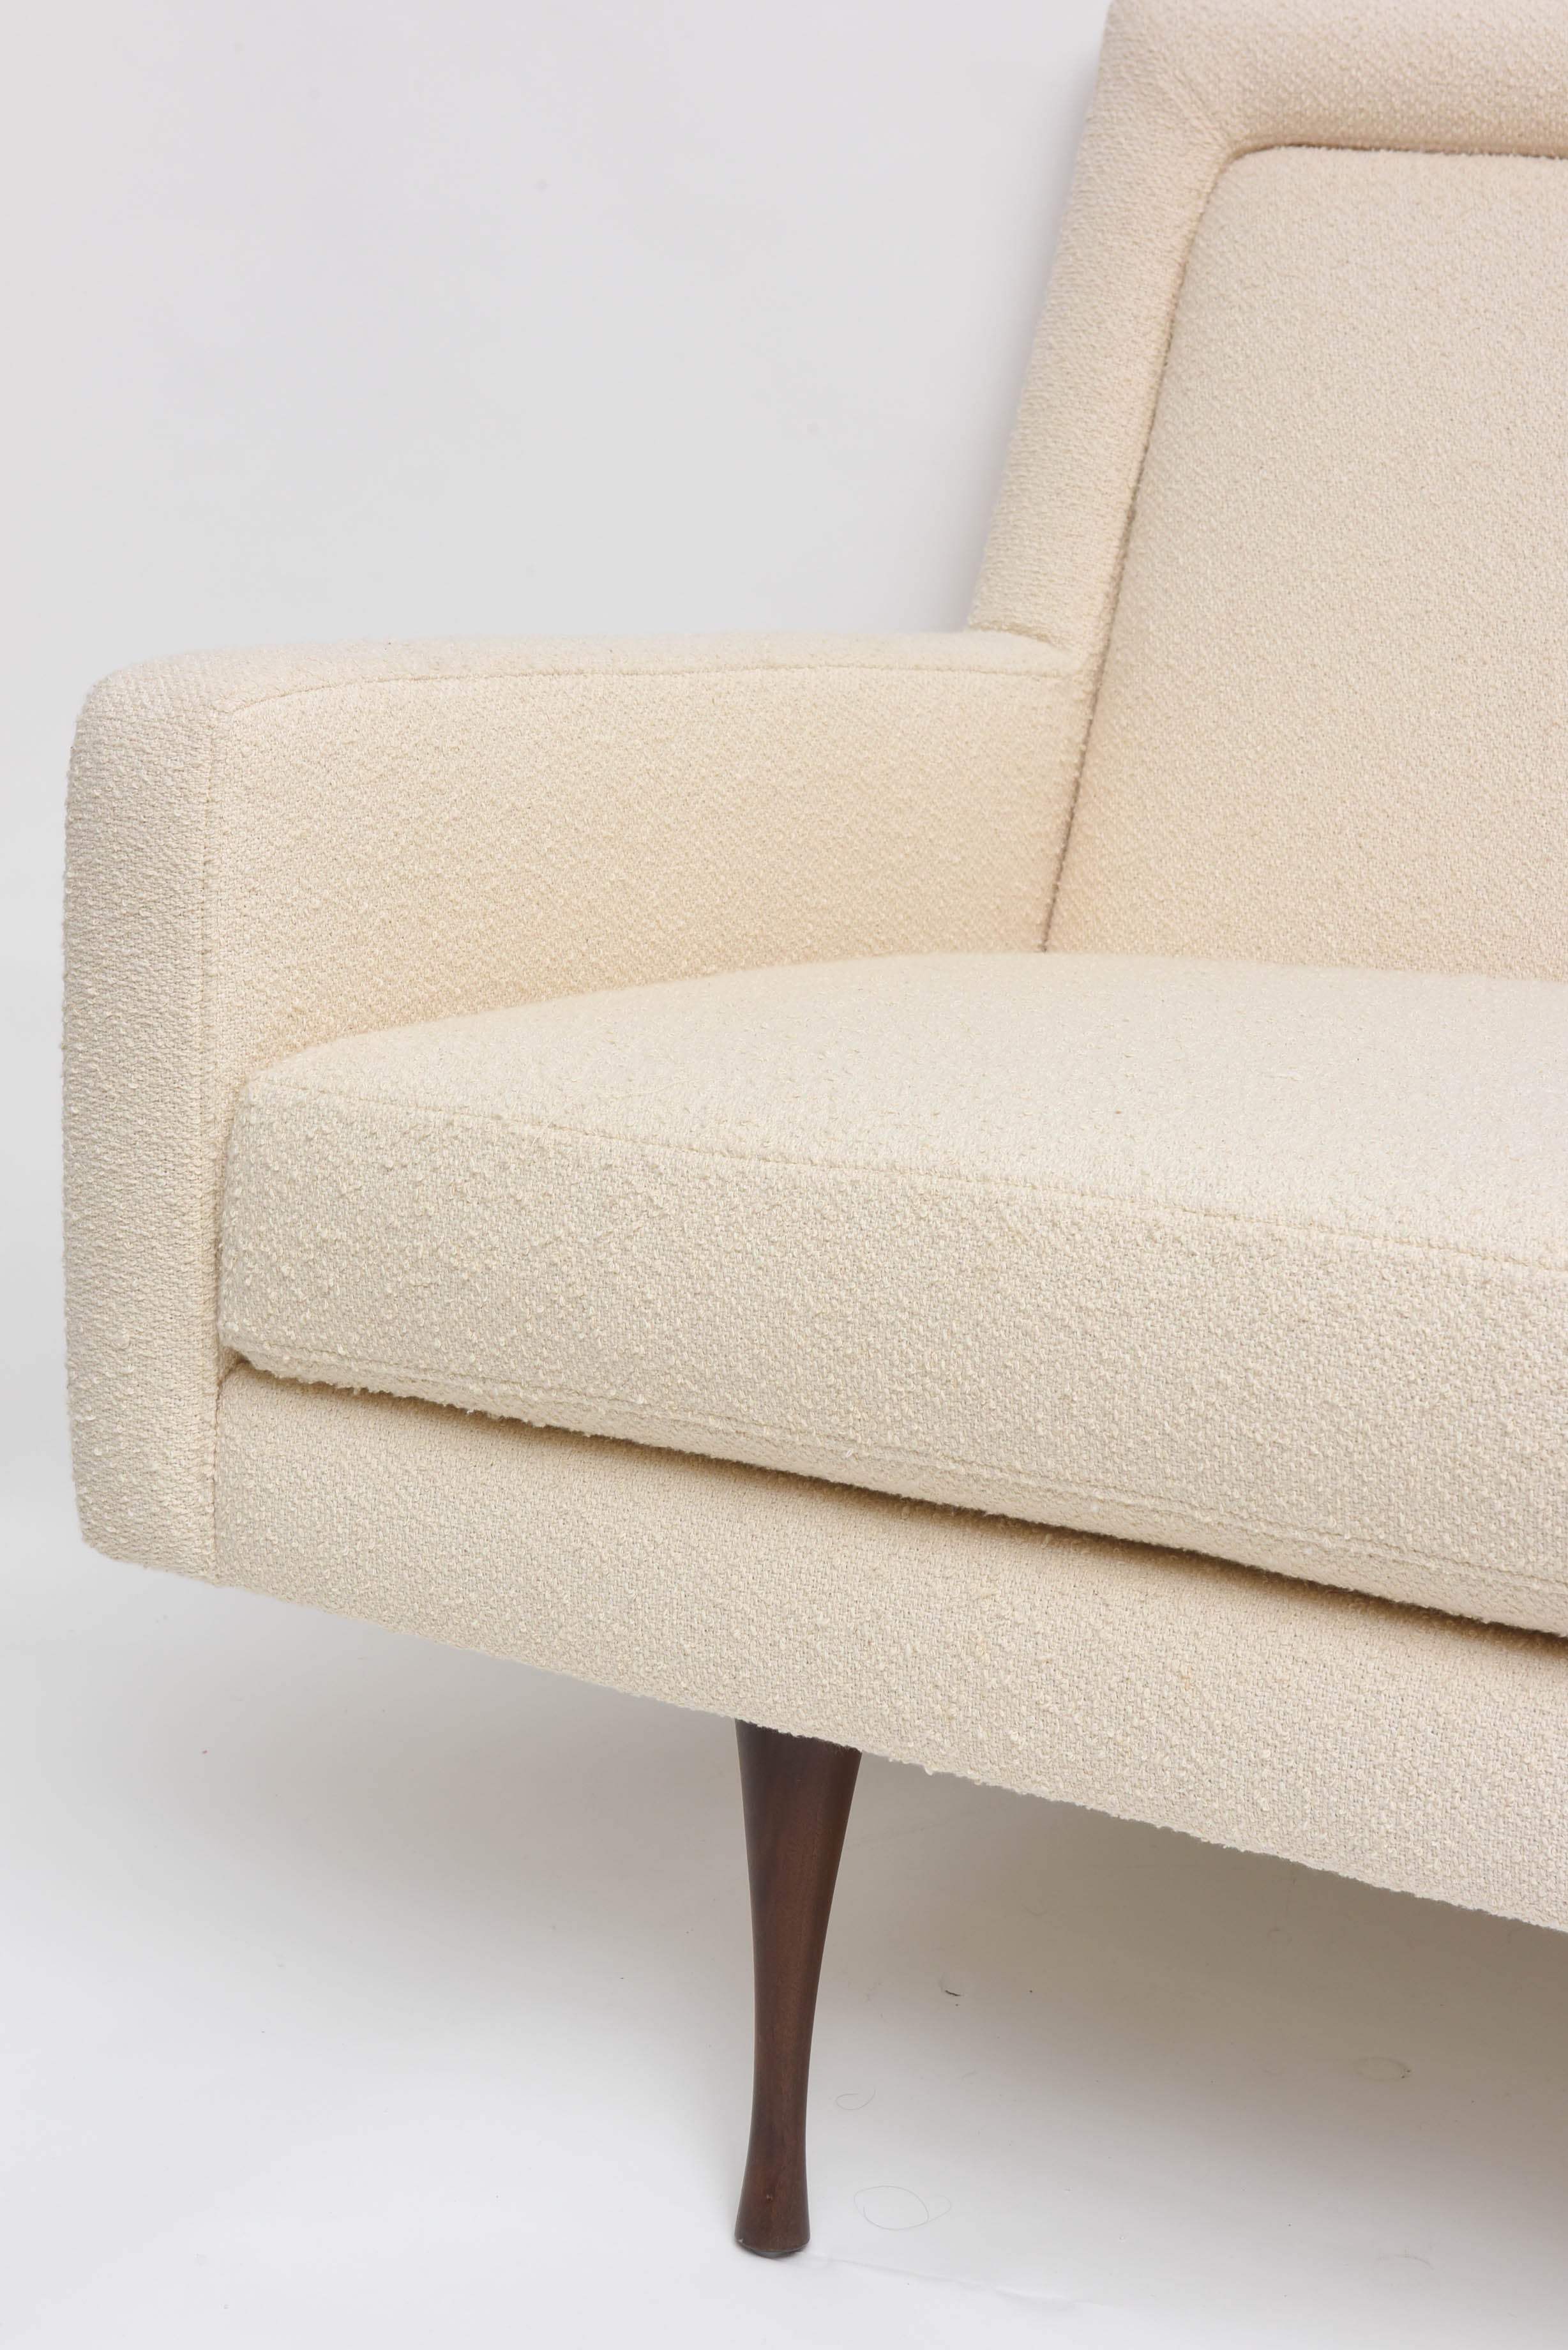 Rare Symmetric Group sofa by Paul McCobb for Widdicomb. Fully restored. Walnut legs, cotton bouclé upholstery.